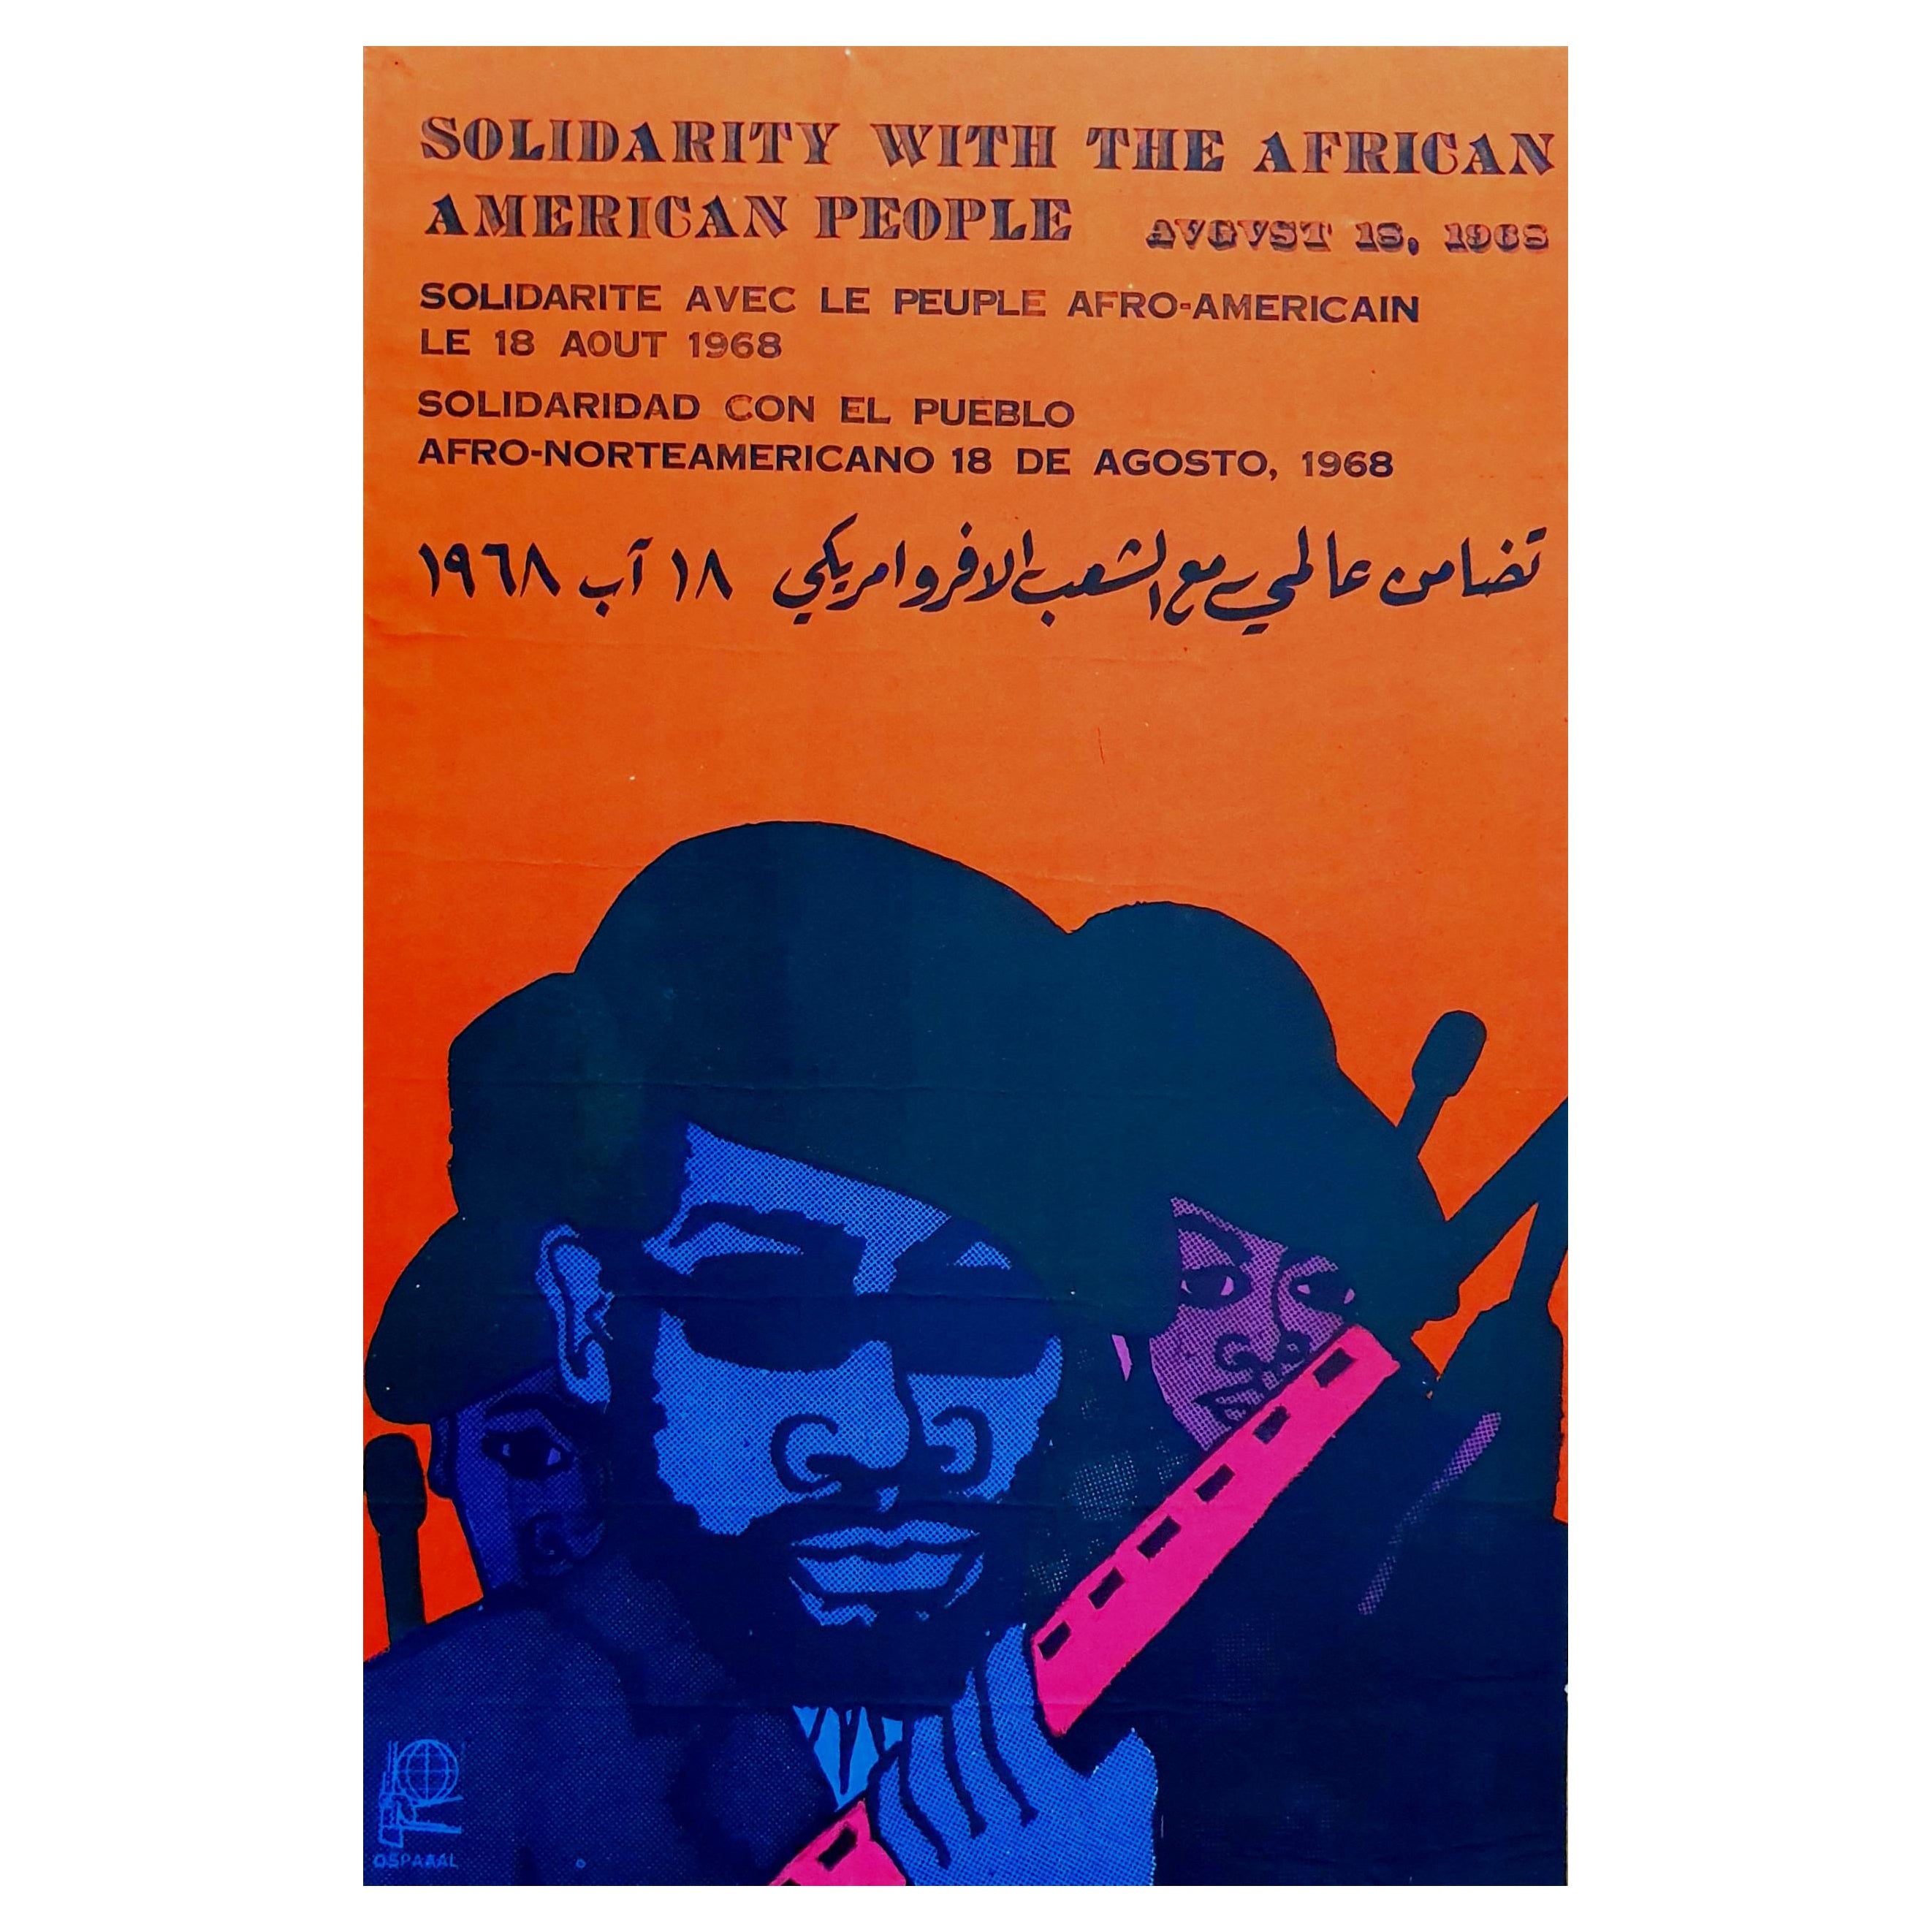 Original vintage opsaaal African American people poster 1968 For Sale